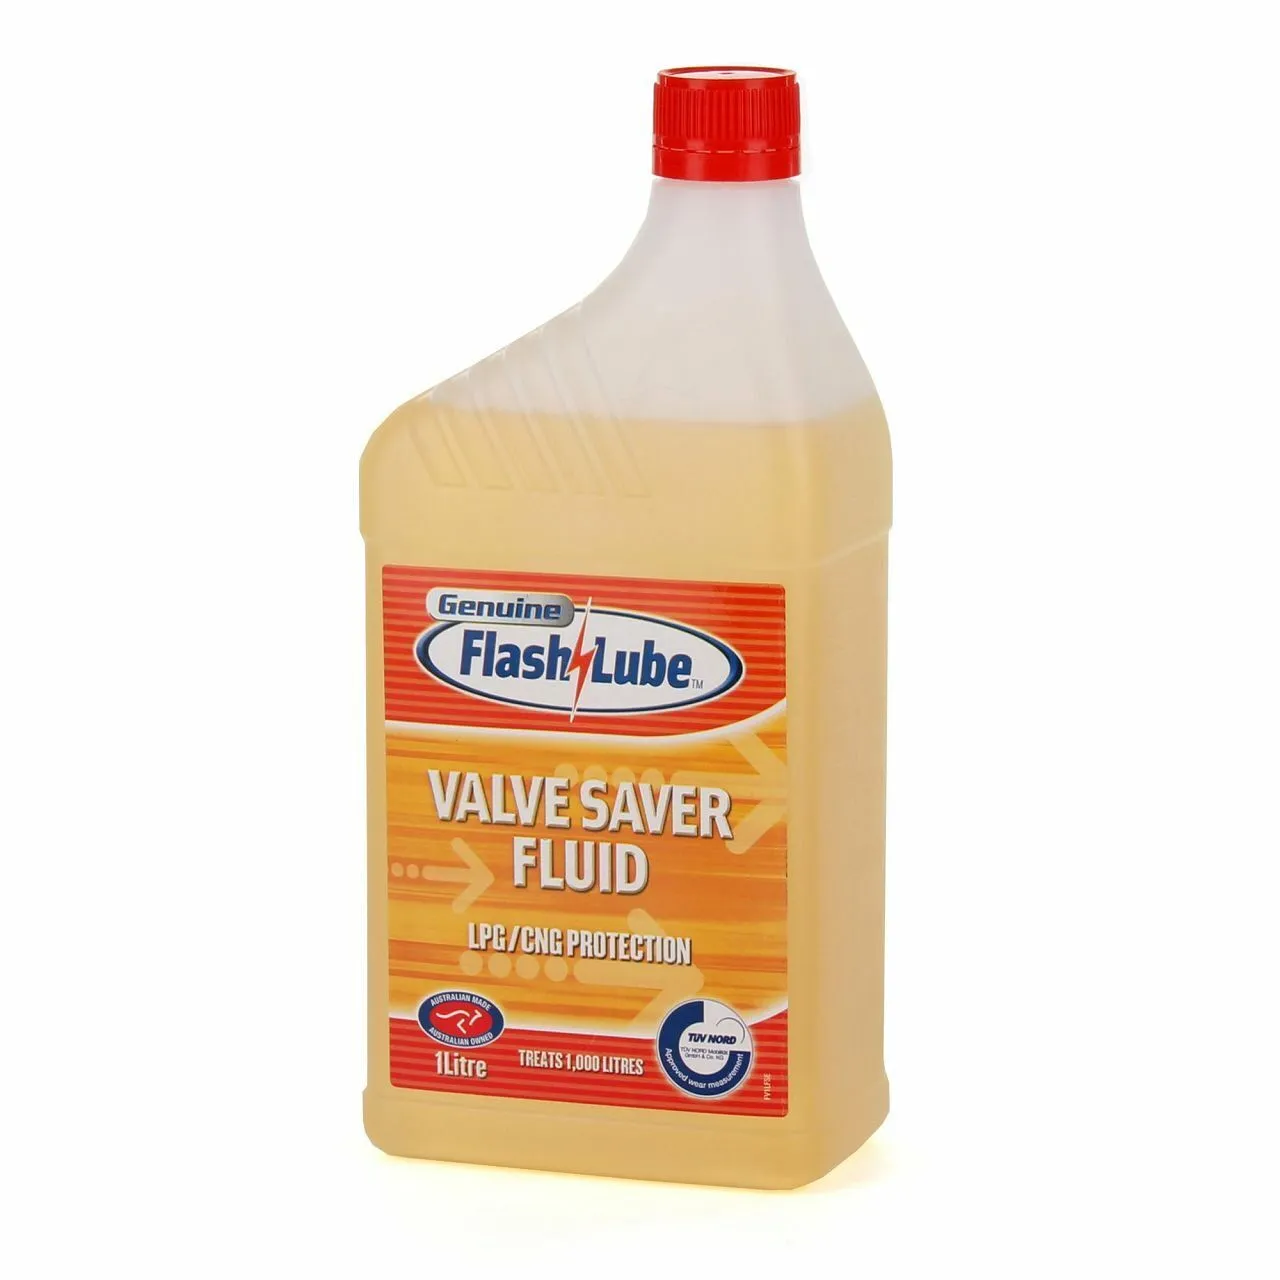 1 Liter flashlube valve saver fluid FV1L 9316889011022 LPG/CNG Protection